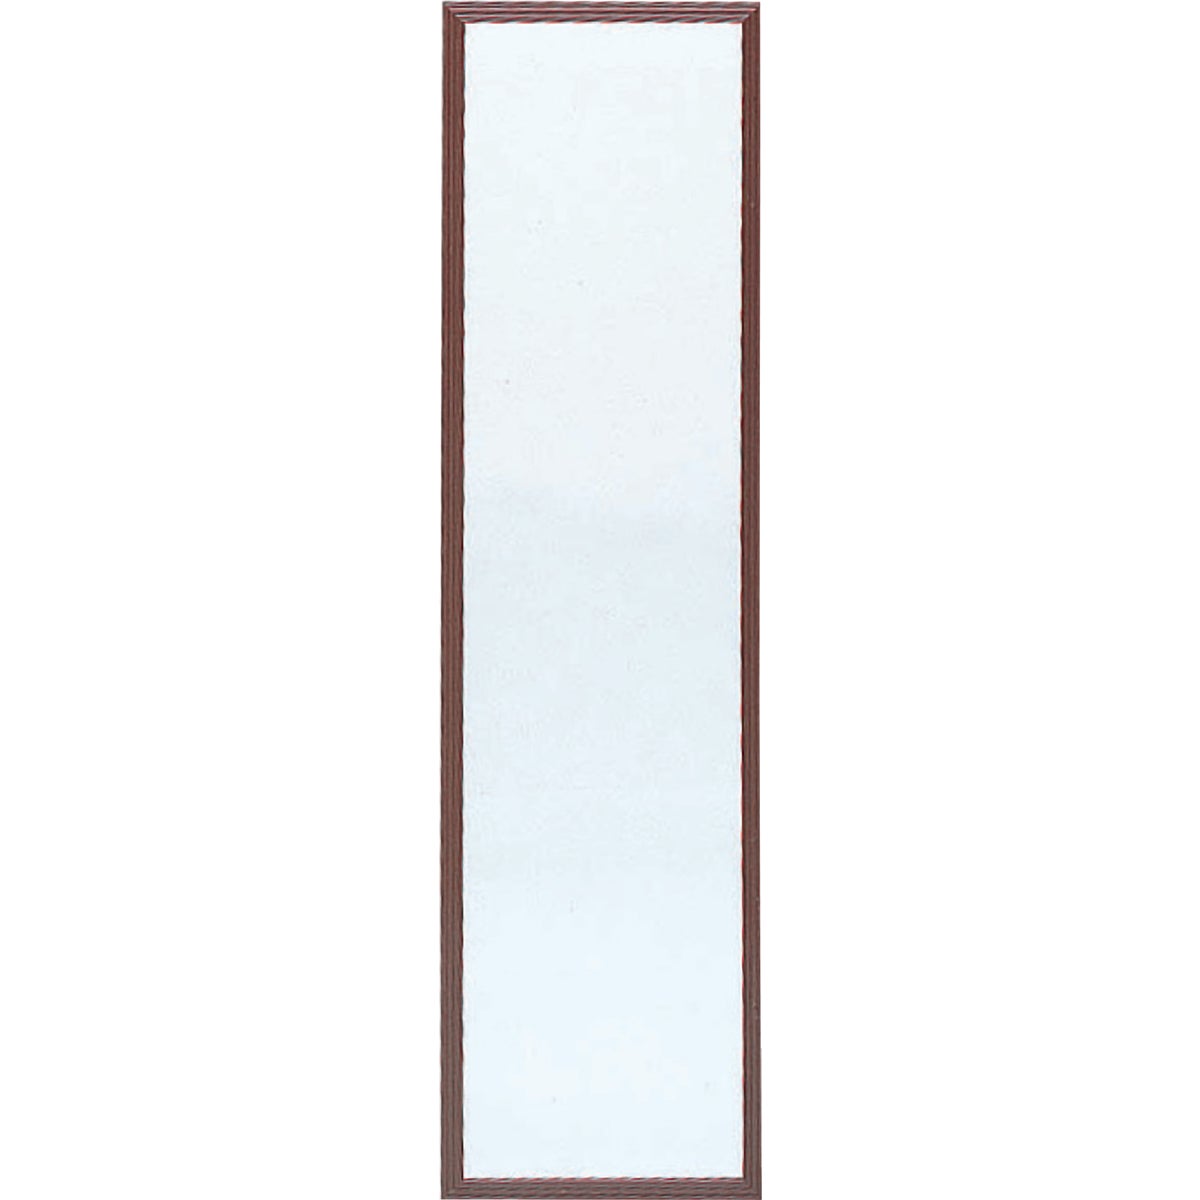 Item 263435, 13" W x 49" H, rectangle molded, plain edge frame door mirror. 2.